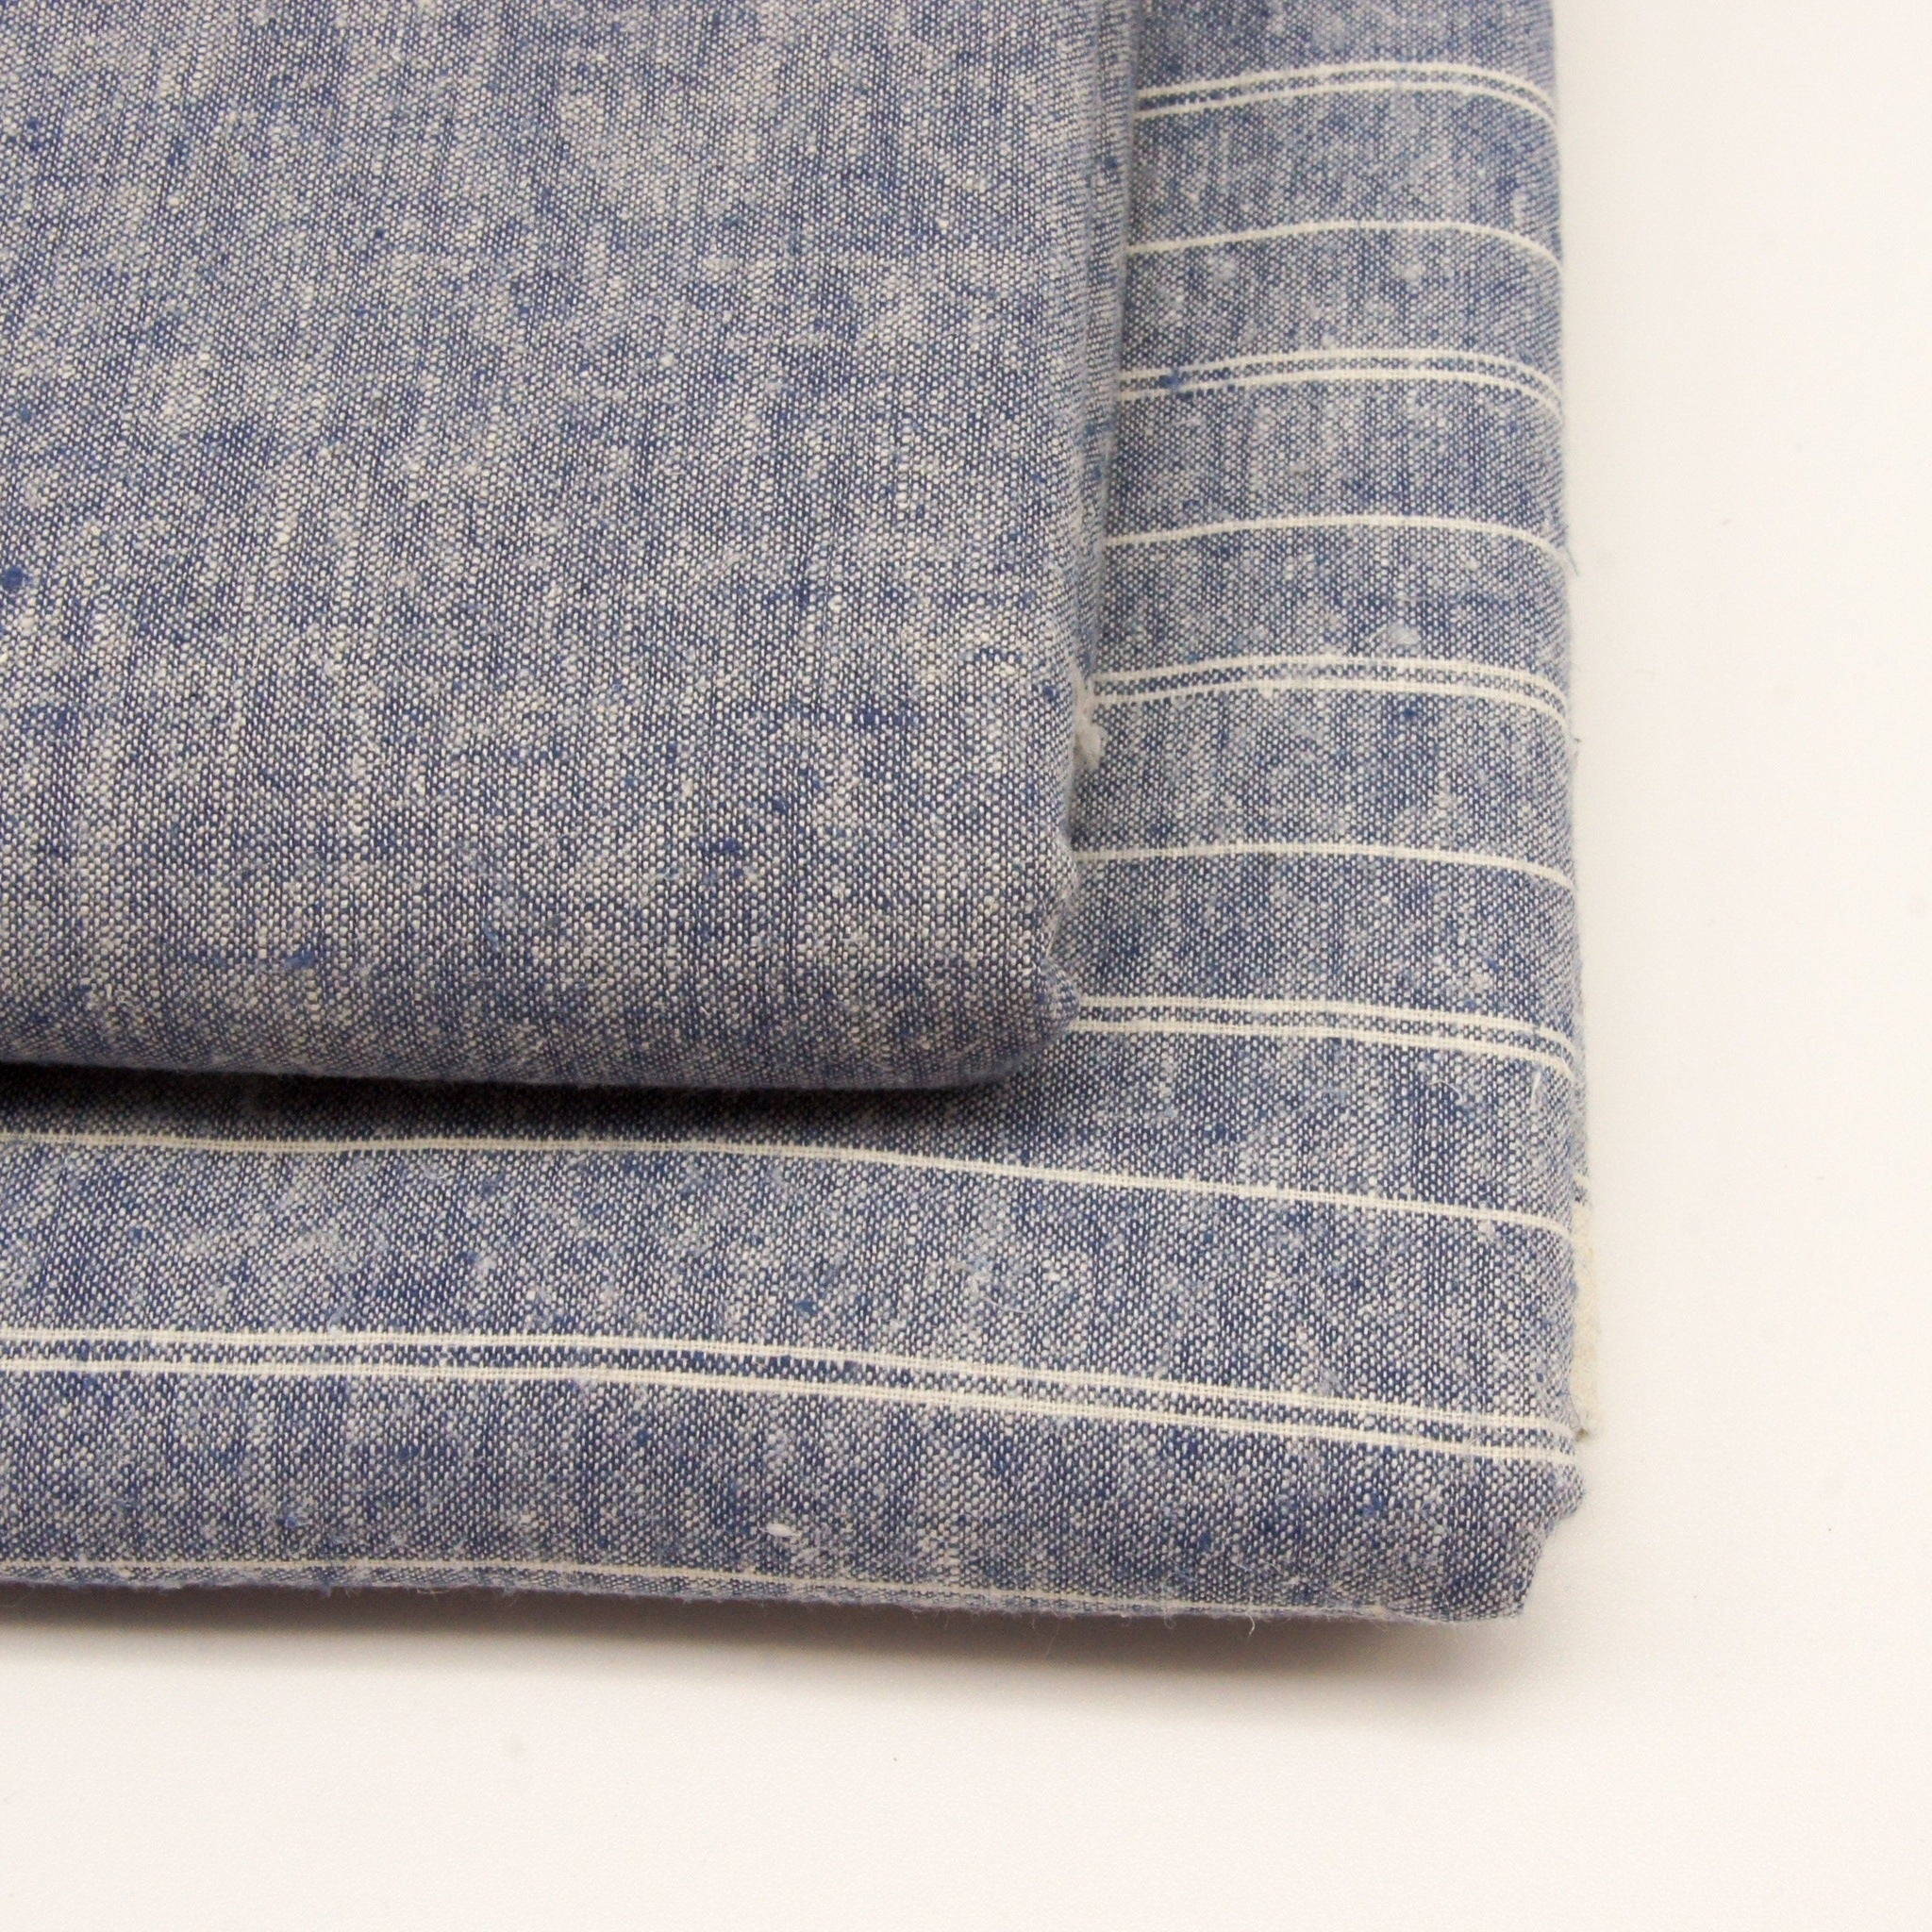 Hemp Organic Cotton Lightweight - Denim Blue Solid - woven - Earth Indigo